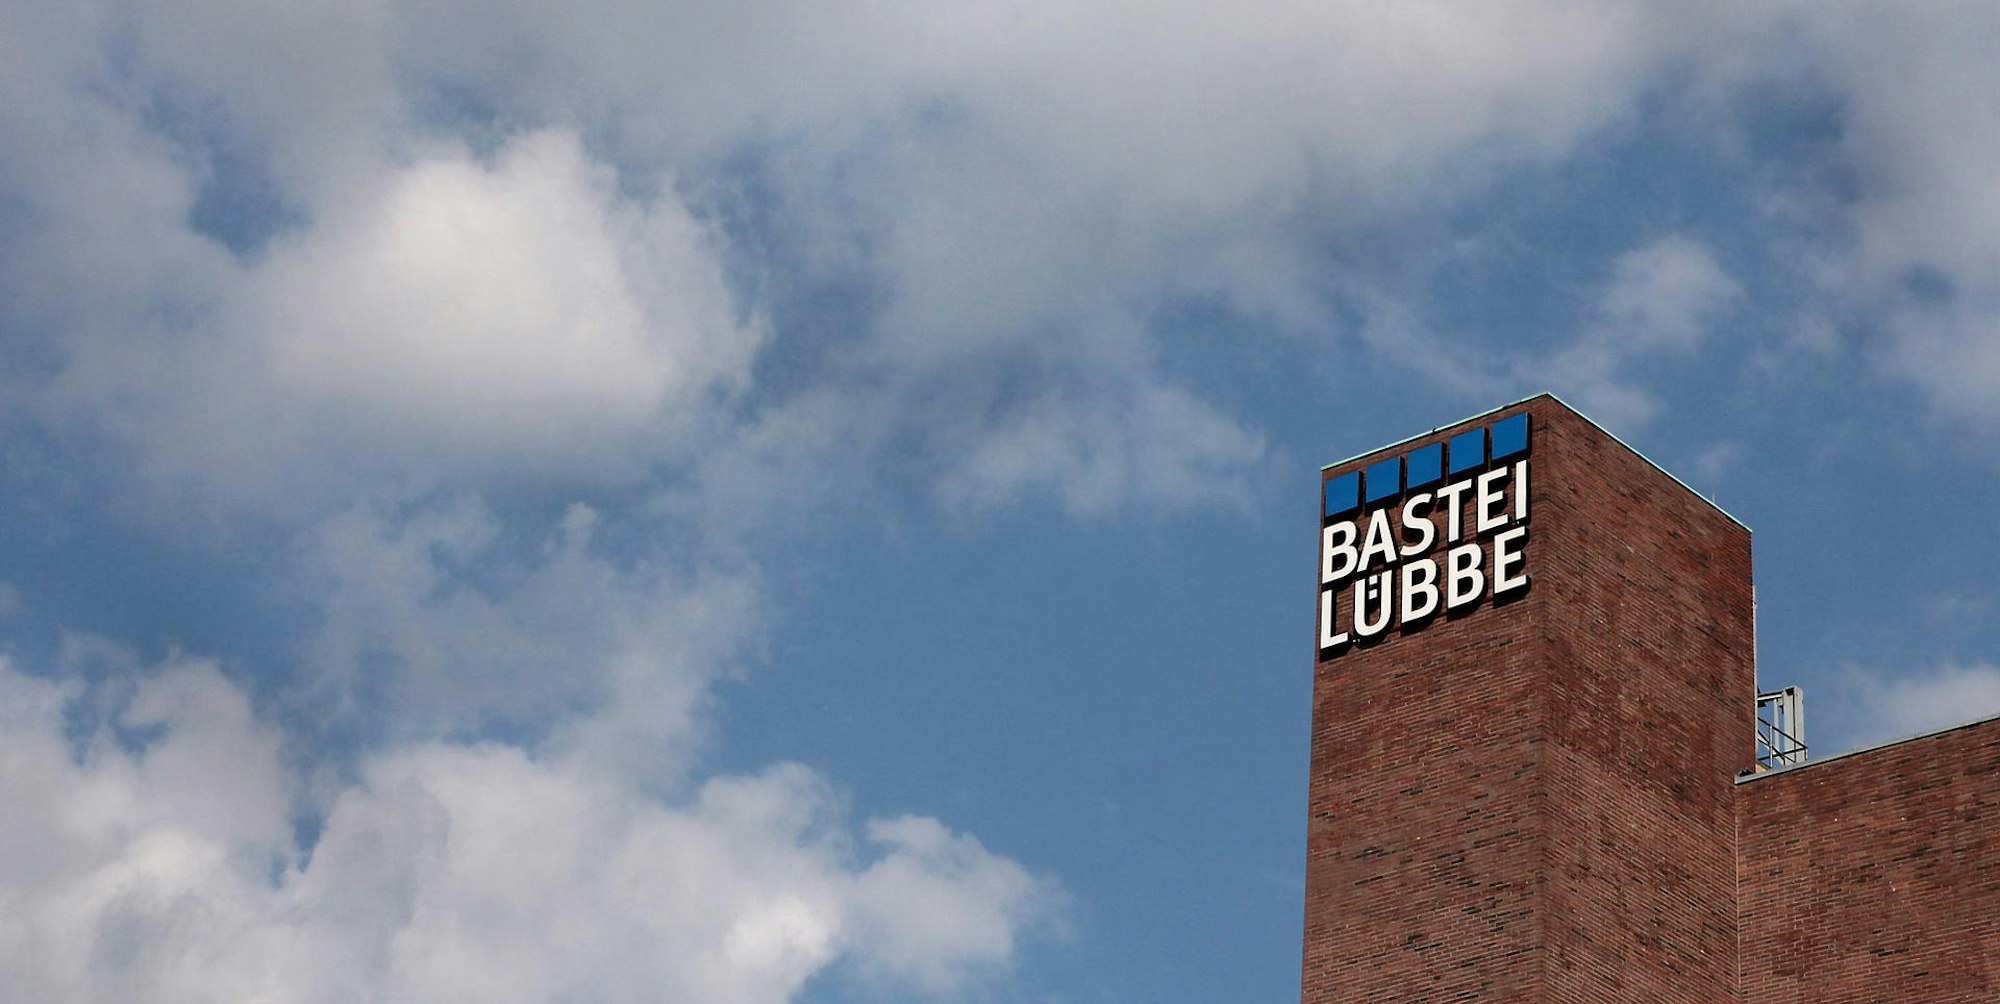 Bastei_Lübbe